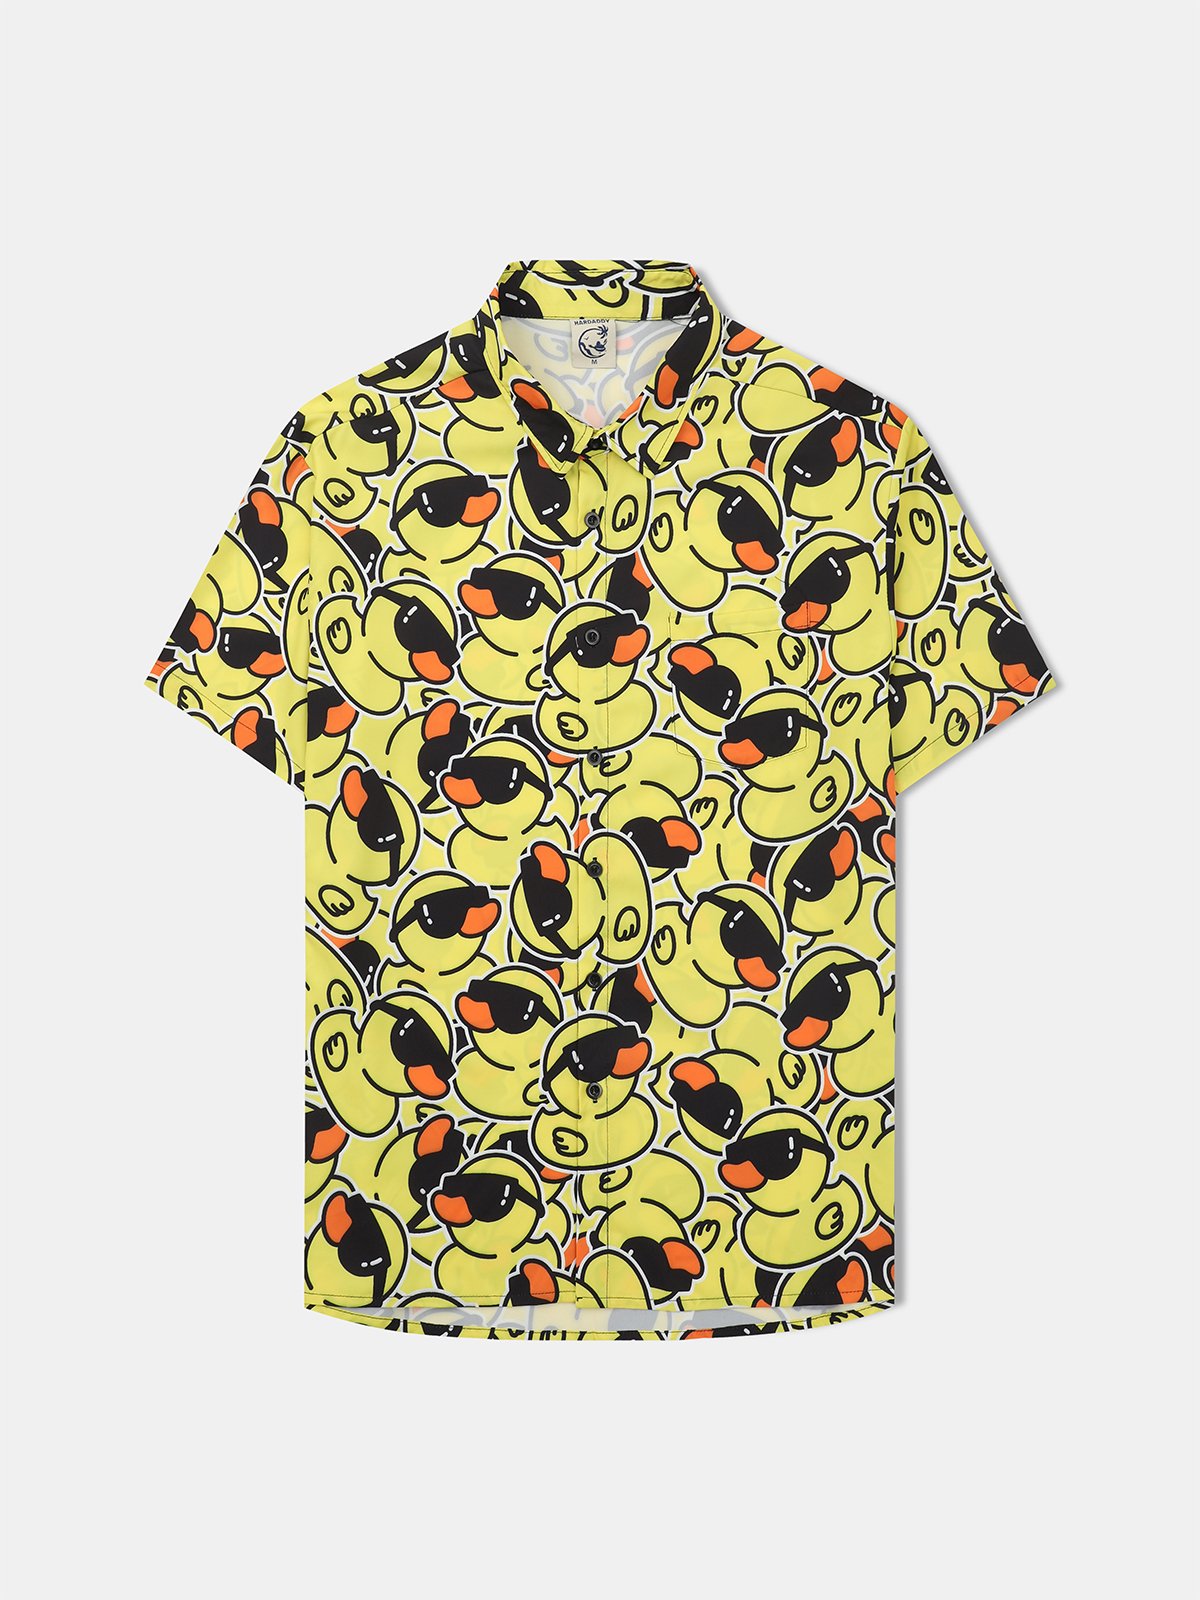 Hardaddy Duckling Chest Pocket Short Sleeve Casual Shirt